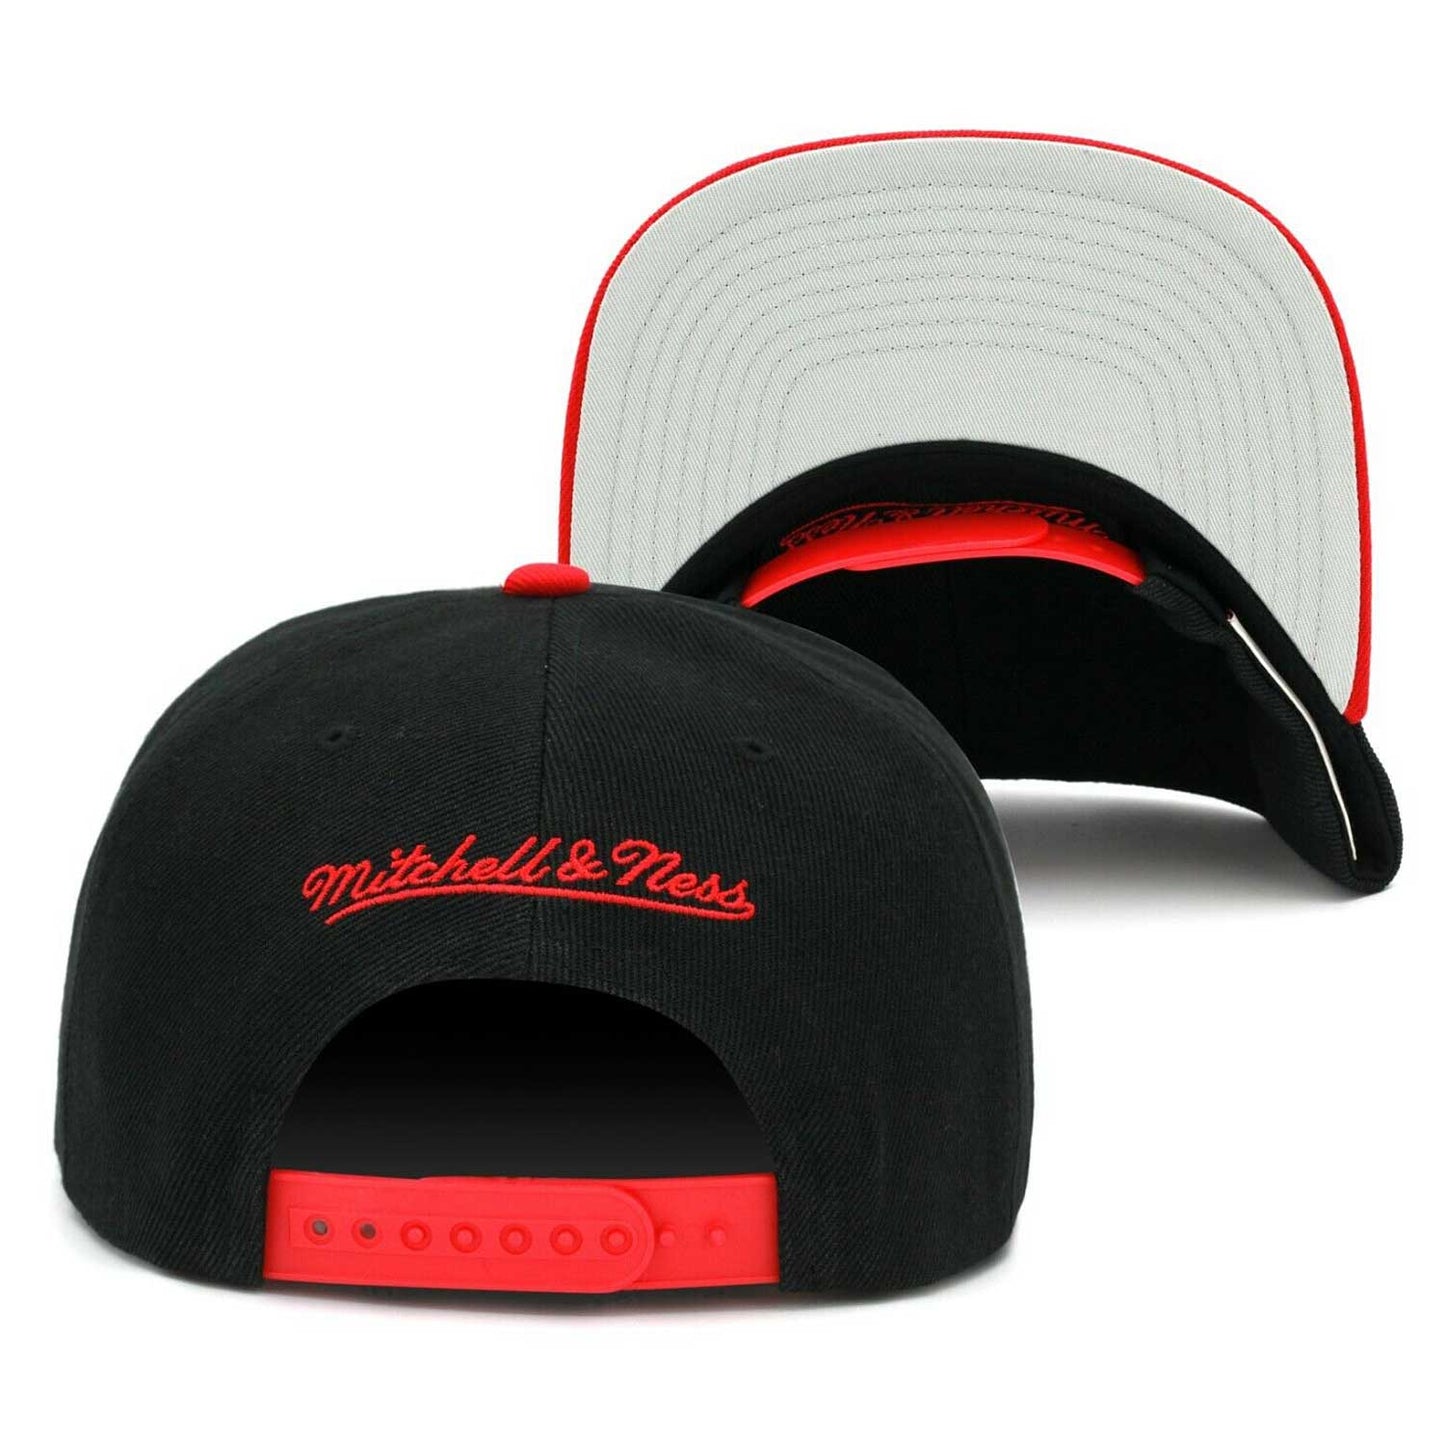 Men's Mitchell & Ness Chicago Bulls Core Black/Red Adjustable Snapback Hat